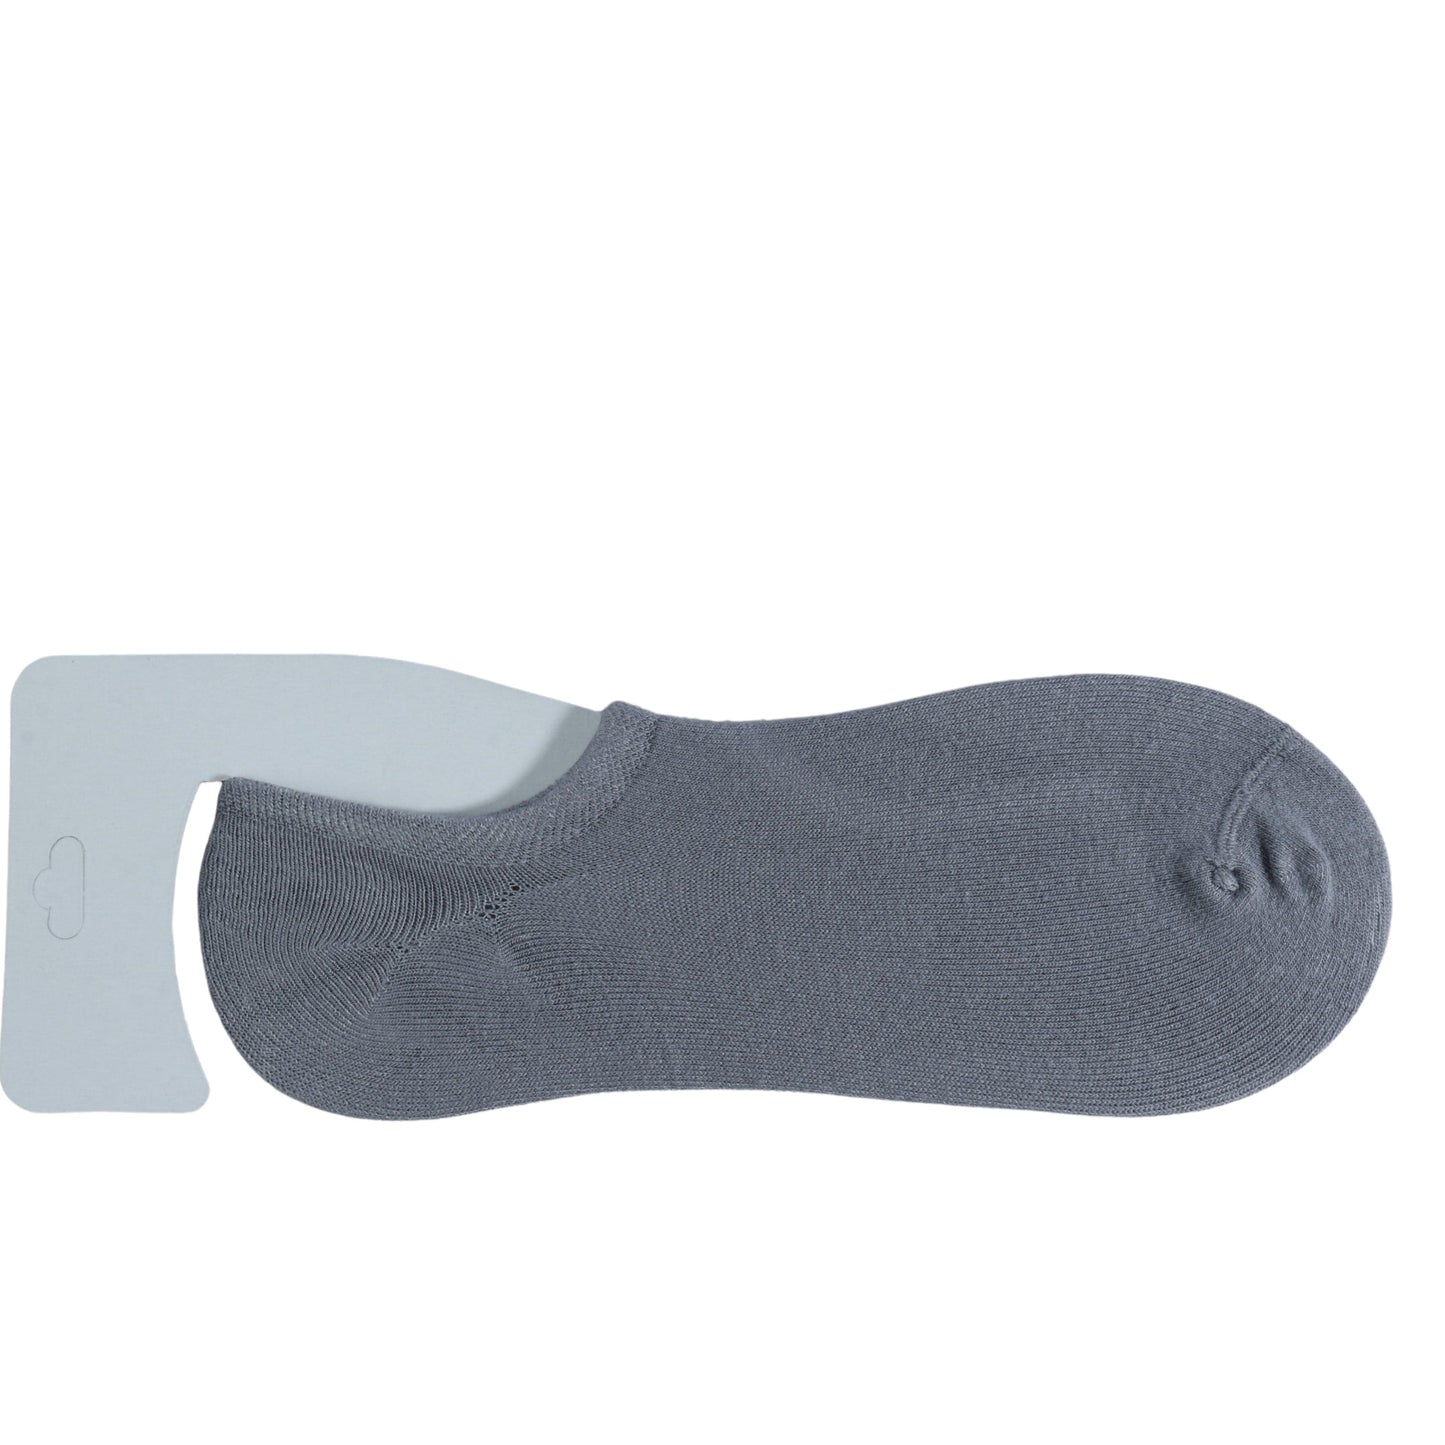 BAMBU Socks 41-45 / Grey BAMBU - Low Top Socks